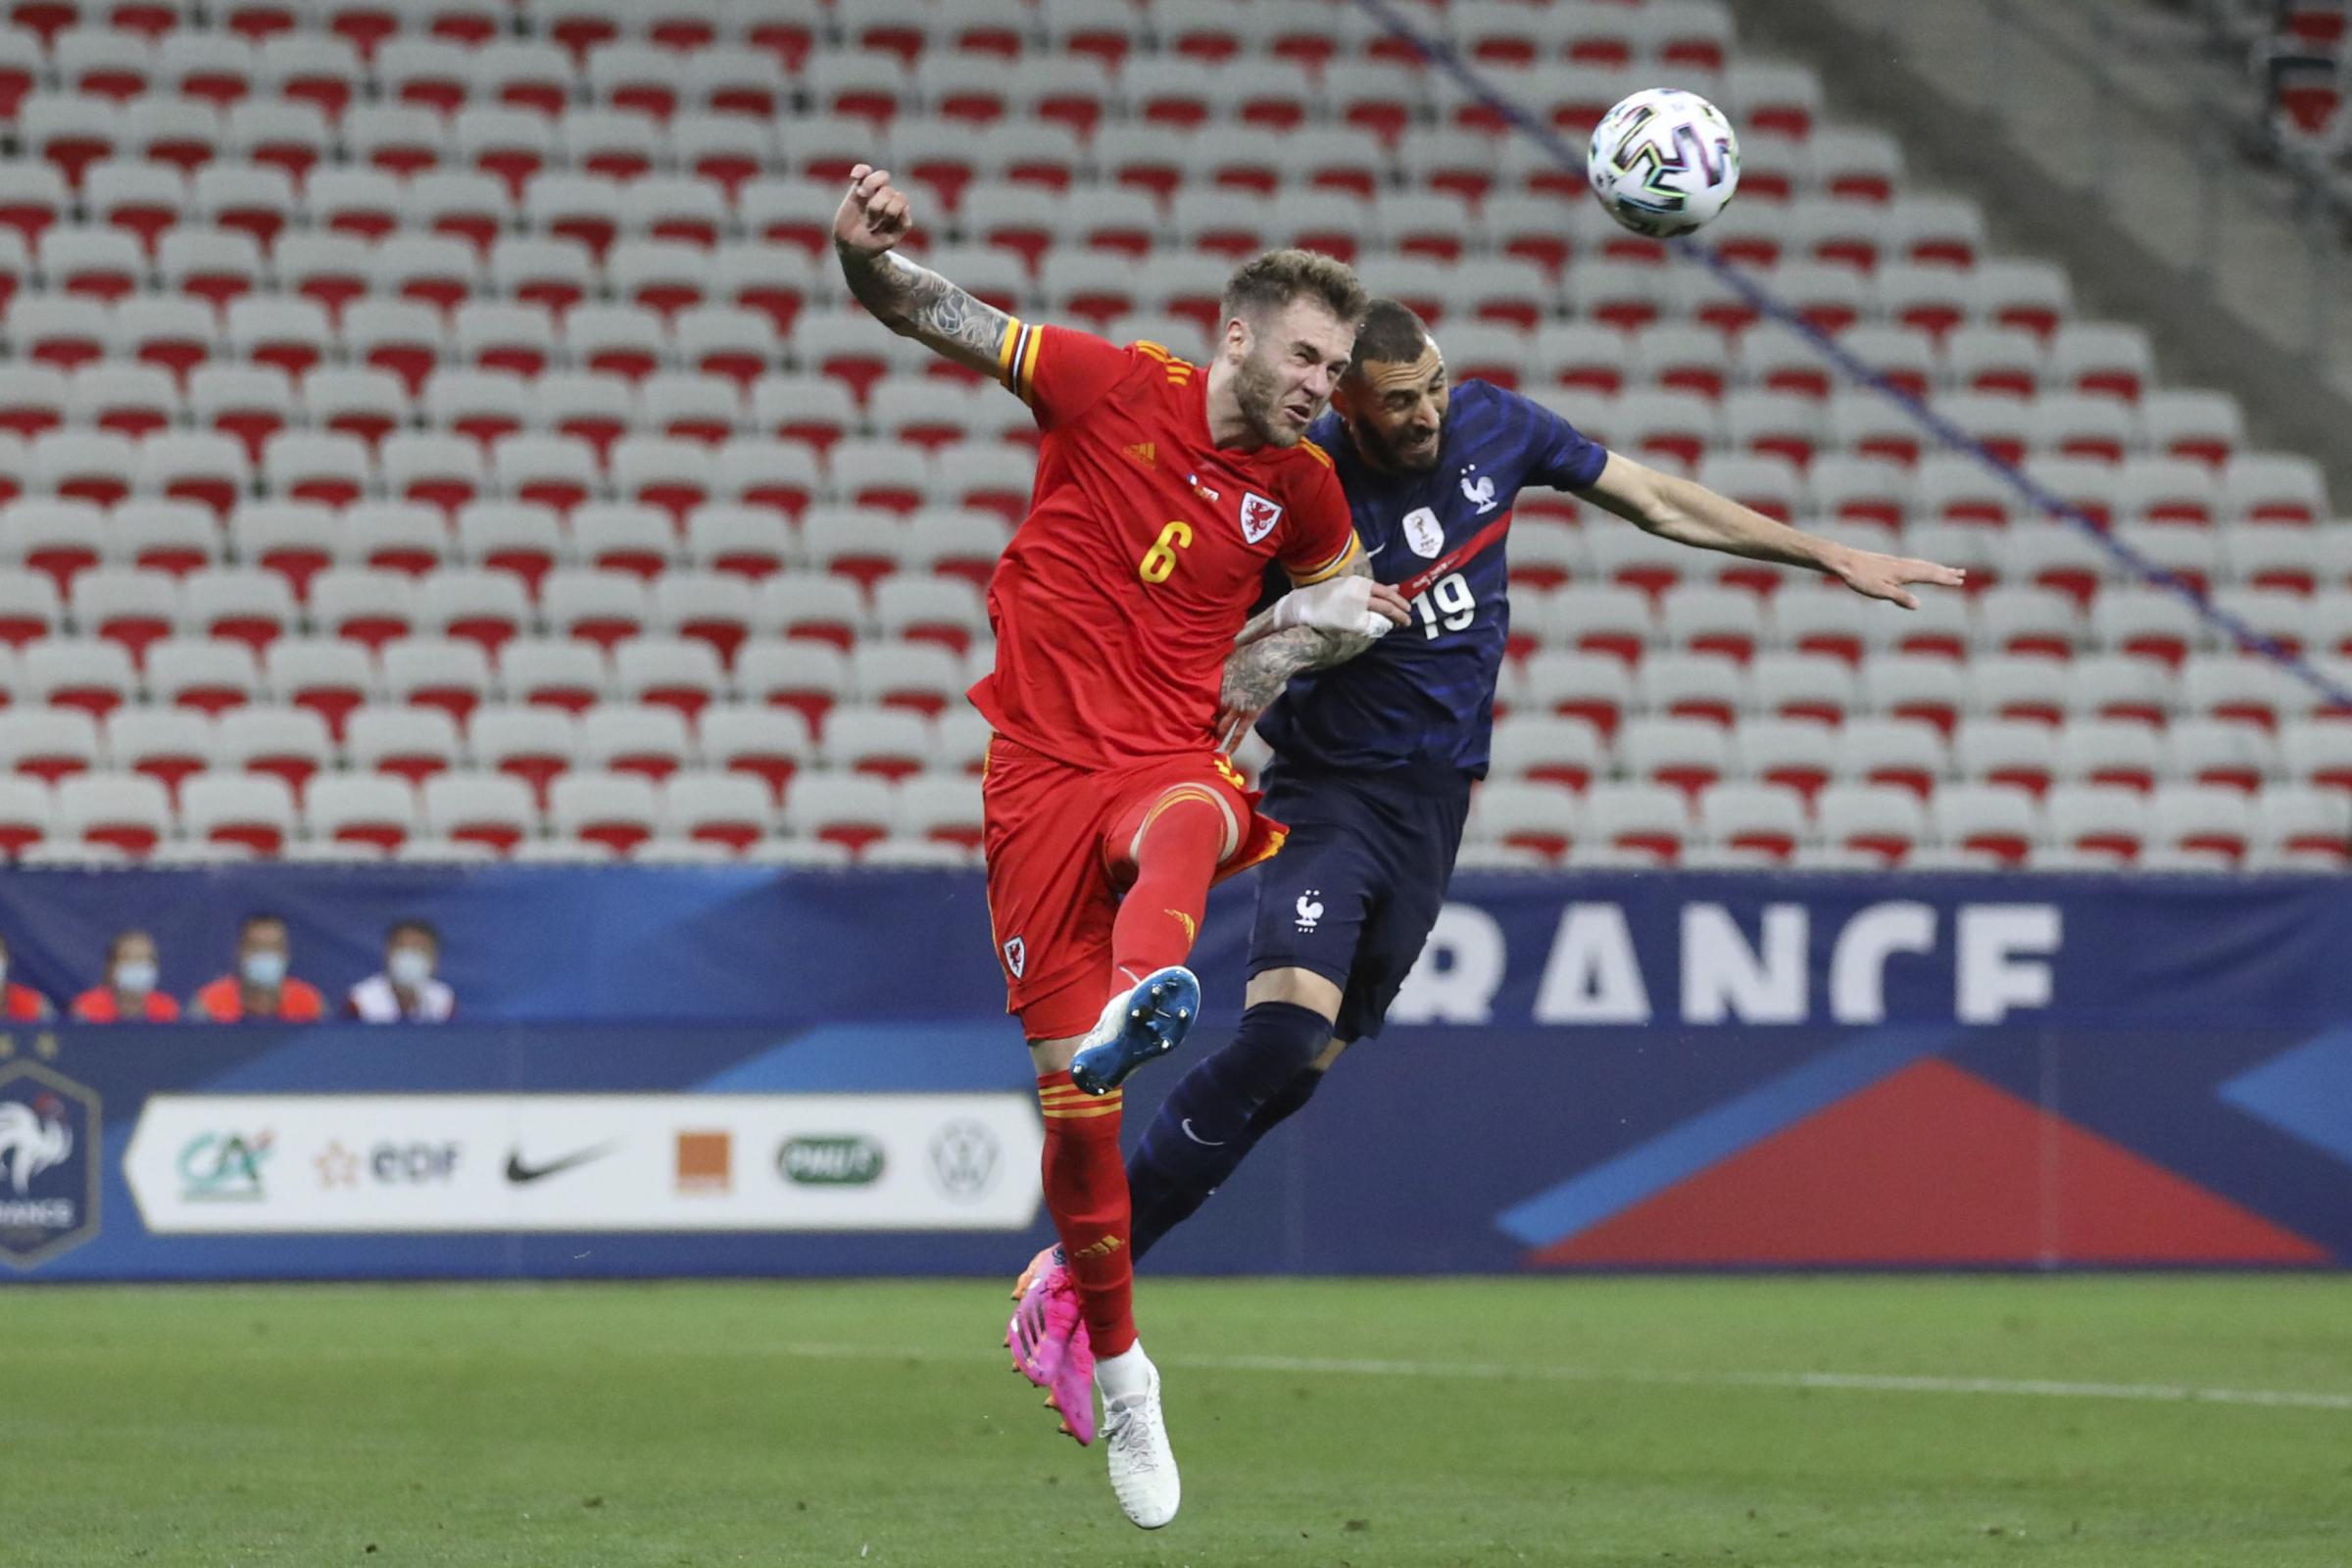 TUSSLE: Centre-back Joe Rodon challenges France’s Karim Benzema